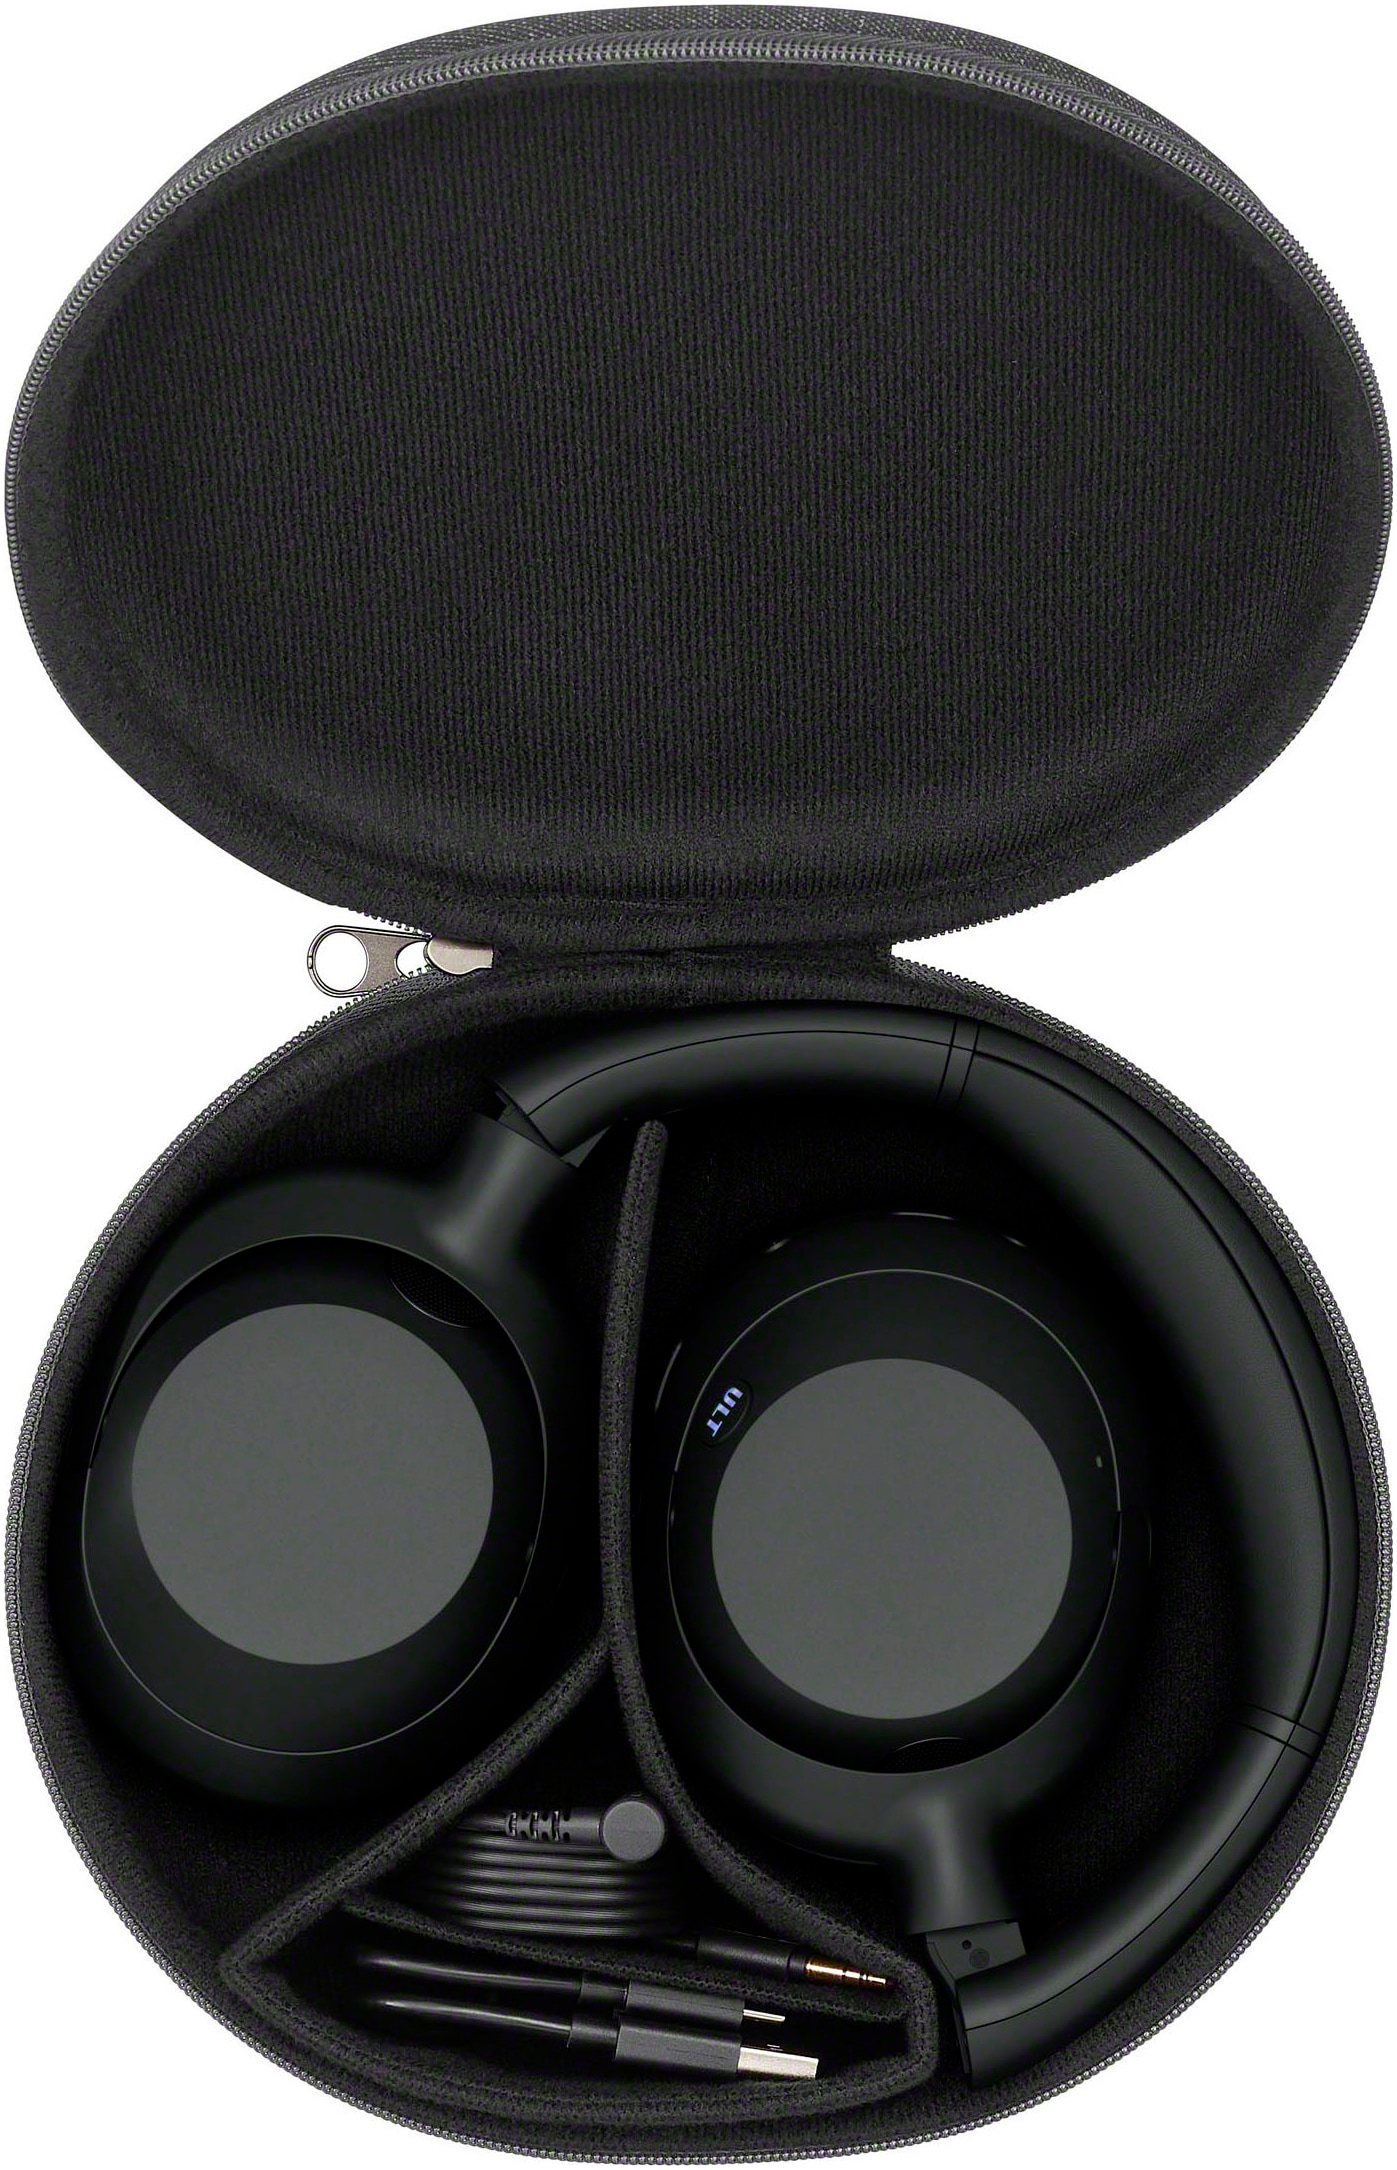 Sony Kopfhörer »ULT Wear«, A2DP Bluetooth-AVRCP Bluetooth-Bluetooth-HFP-HSP, Multi-Point-Verbindung-Noise-Cancelling-Sprachsteuerung-kompatibel mit Siri, tiefem Bass, Geräuschunterdrückung, klare Anrufqualität, iOS & Android